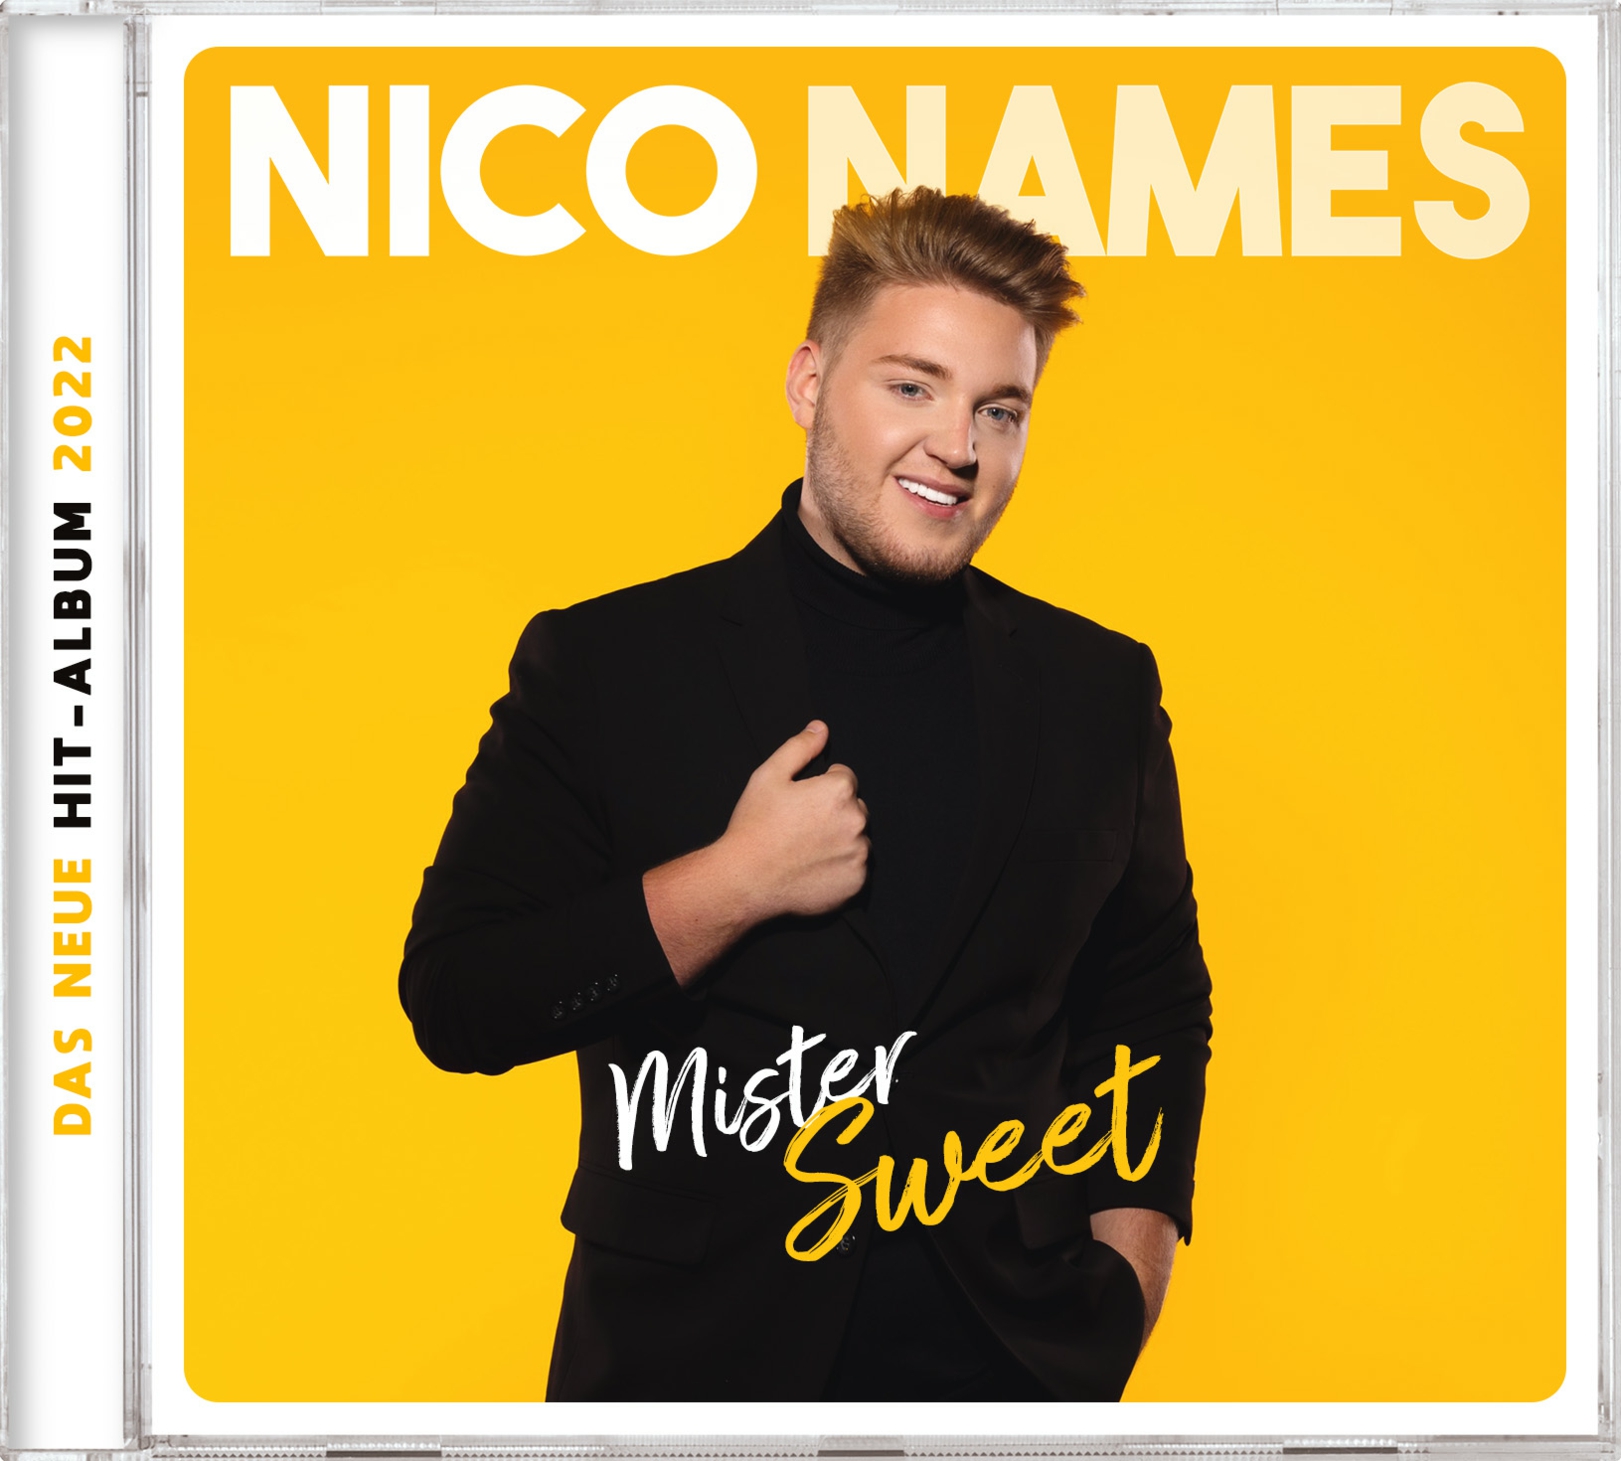 NICO NAMES * Mr. Sweet (CD)